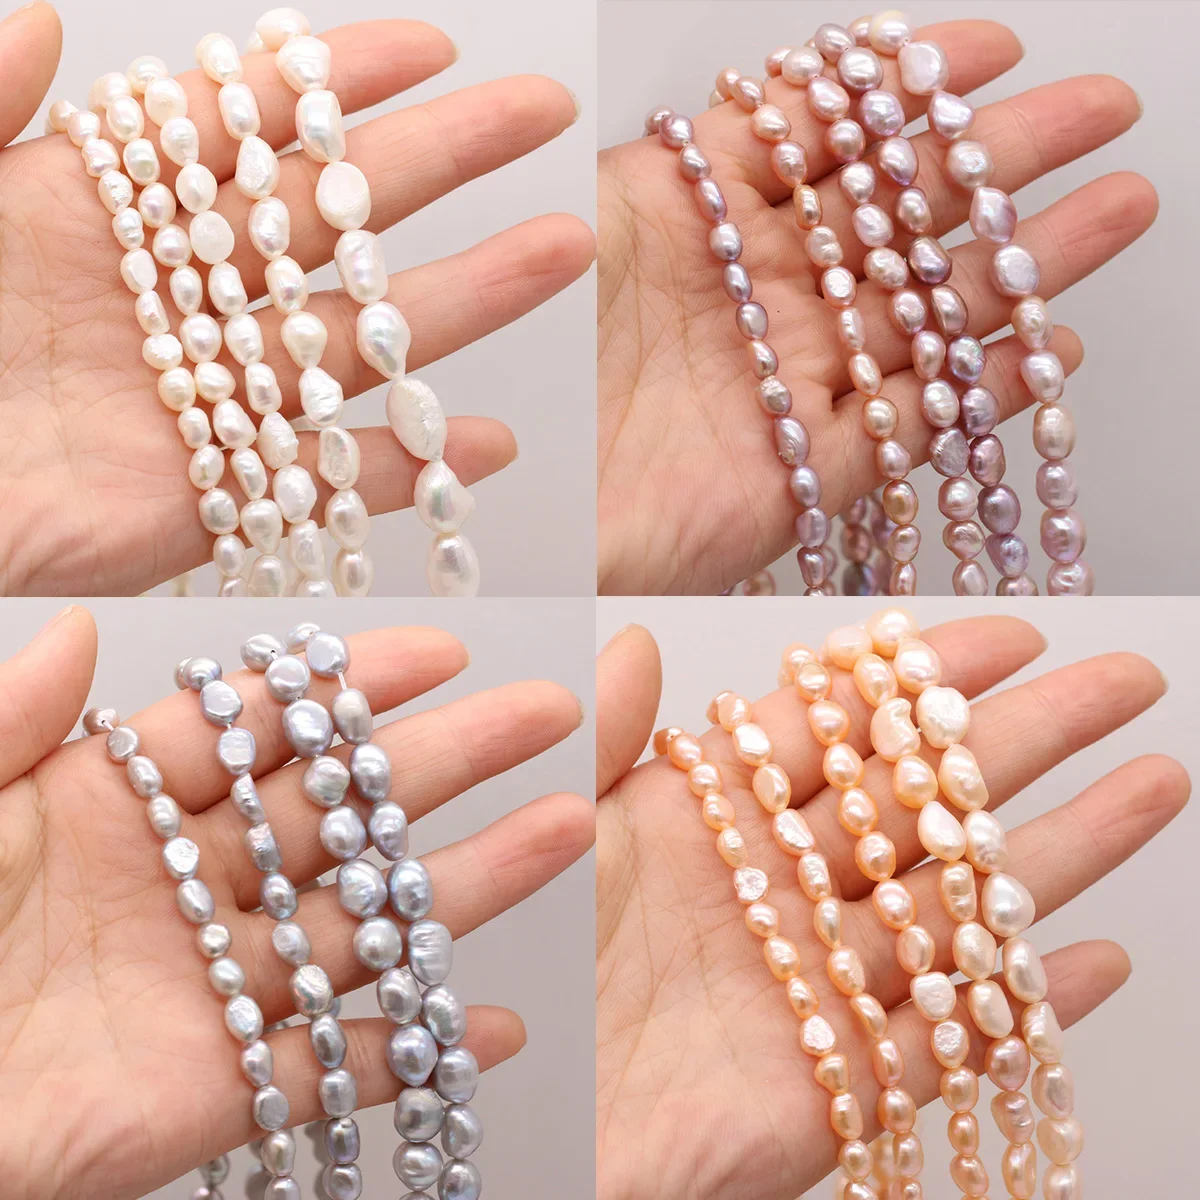 Eshwater pearl beads grey black white fine irregular pearls bead for jewelry making diy thumb200